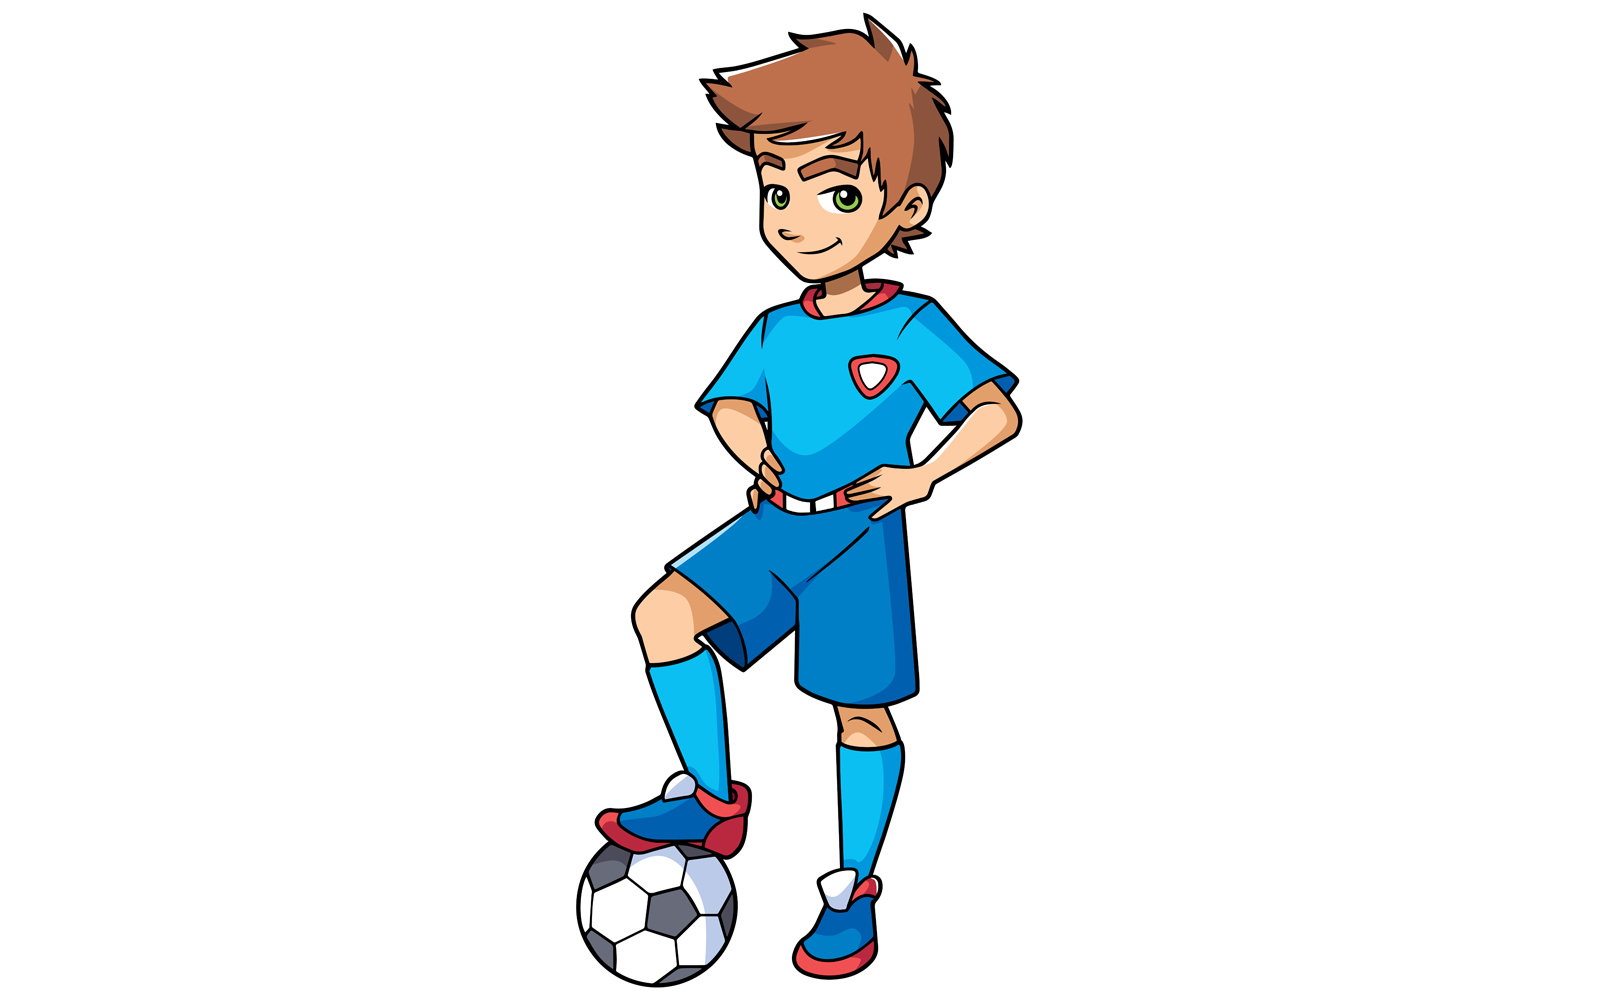 Football Boy Standing - Illustration